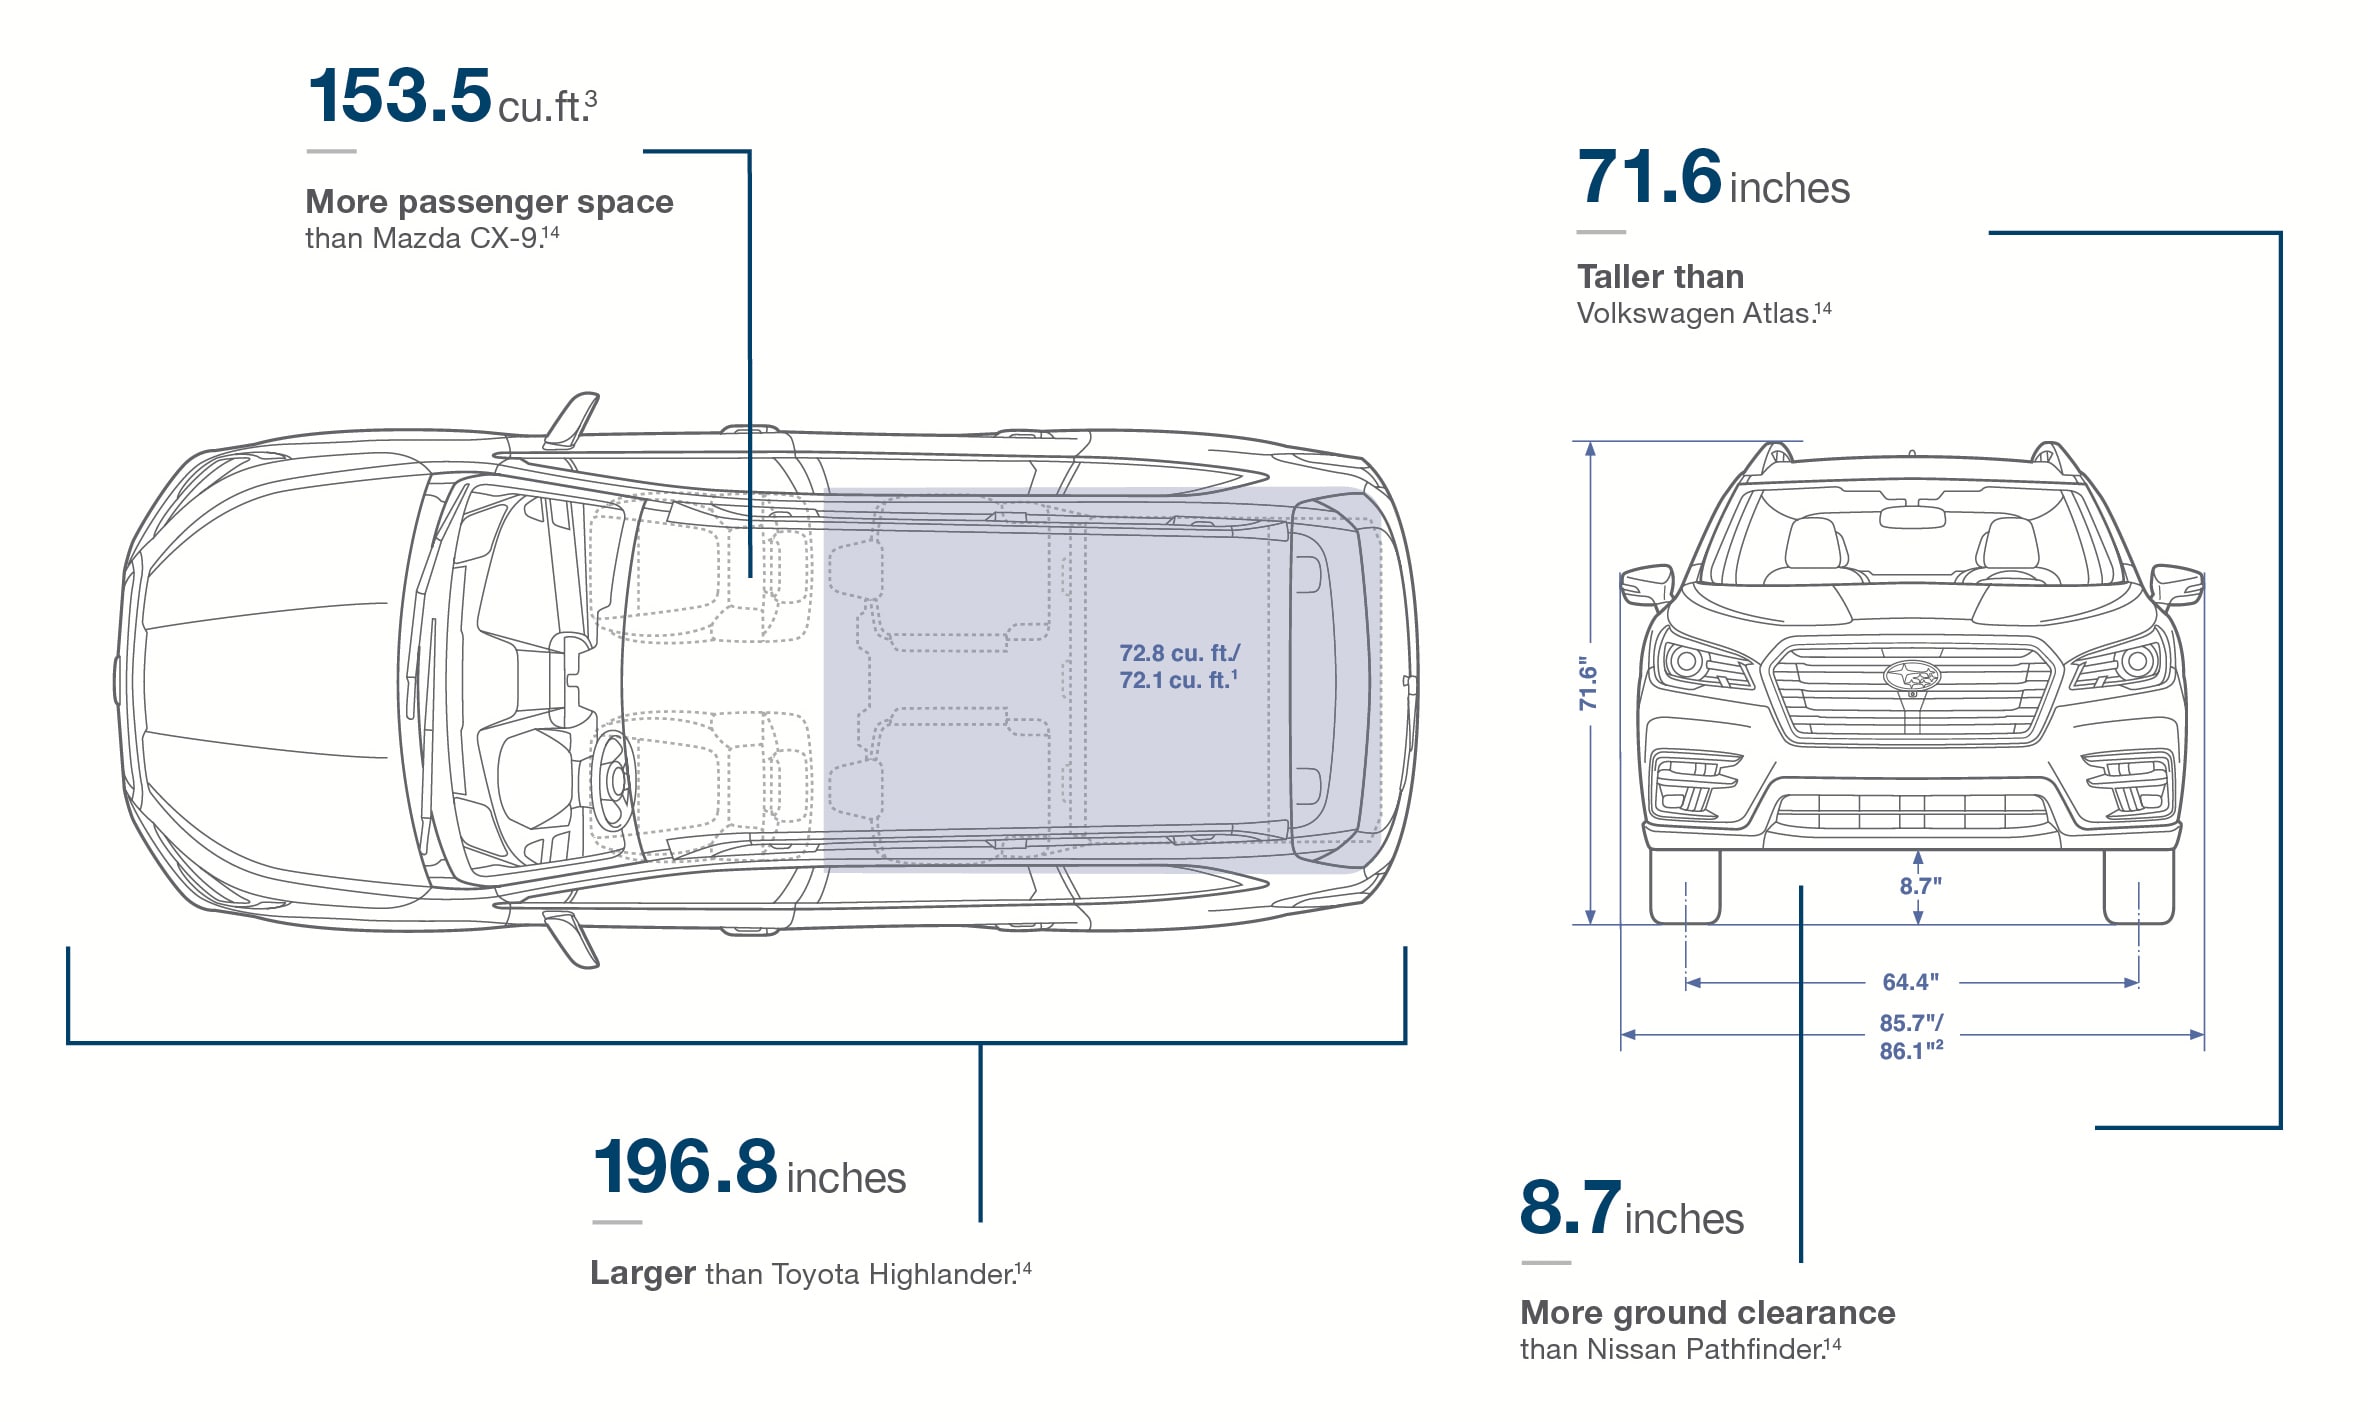 2019 Subaru Ascent, Subaru's new 3rd Row SUV coming soon to Tulsa